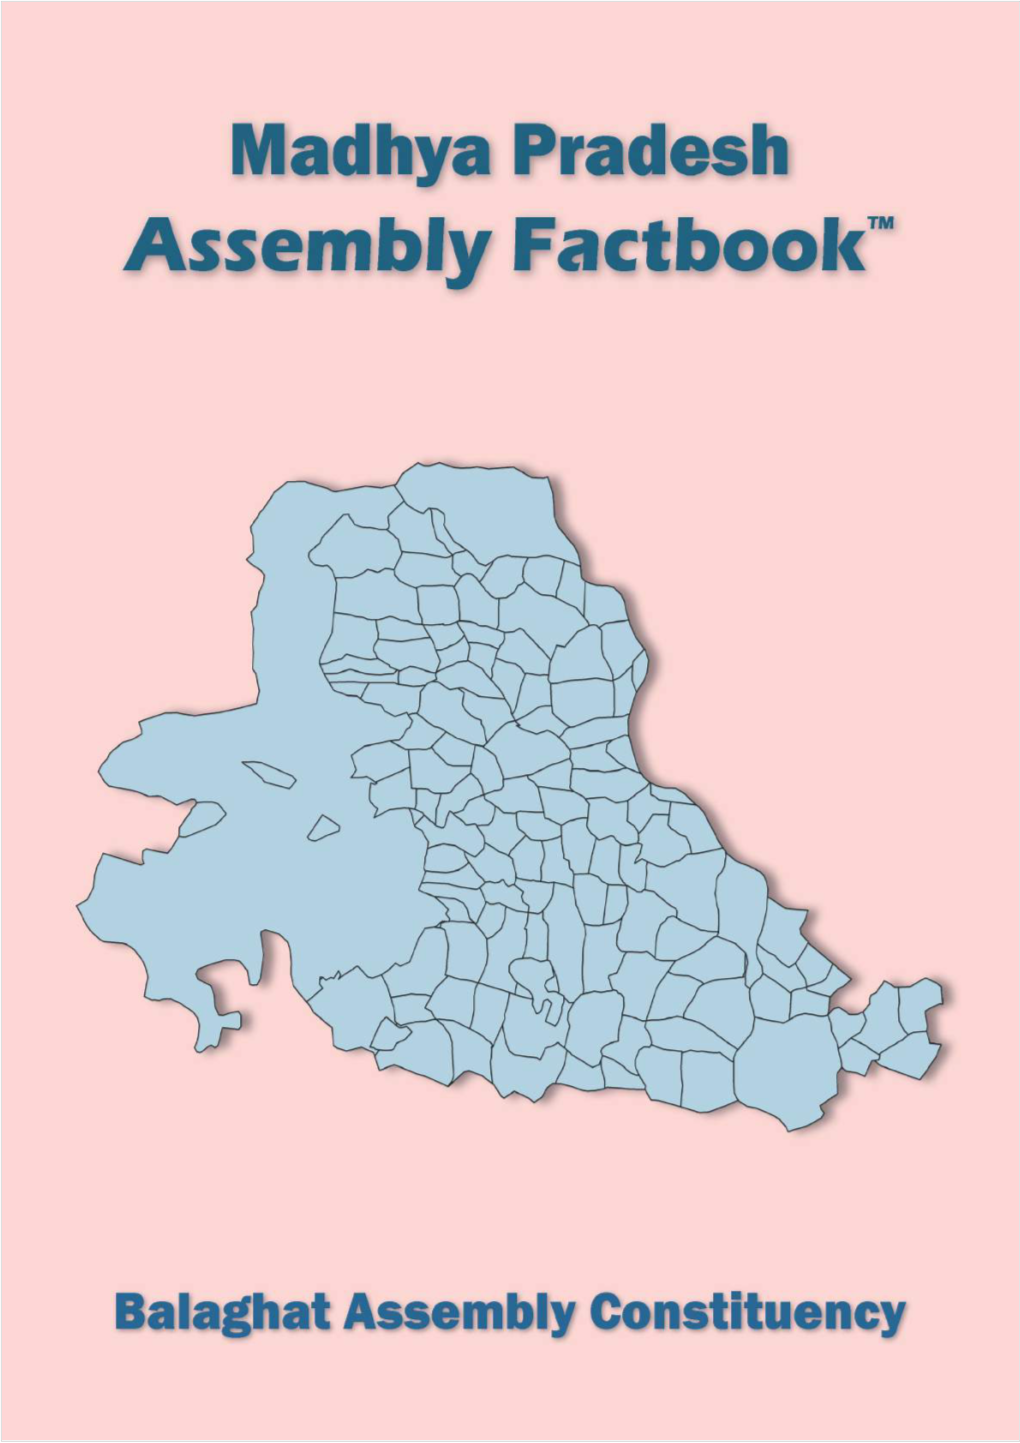 Balaghat Assembly Madhya Pradesh Factbook